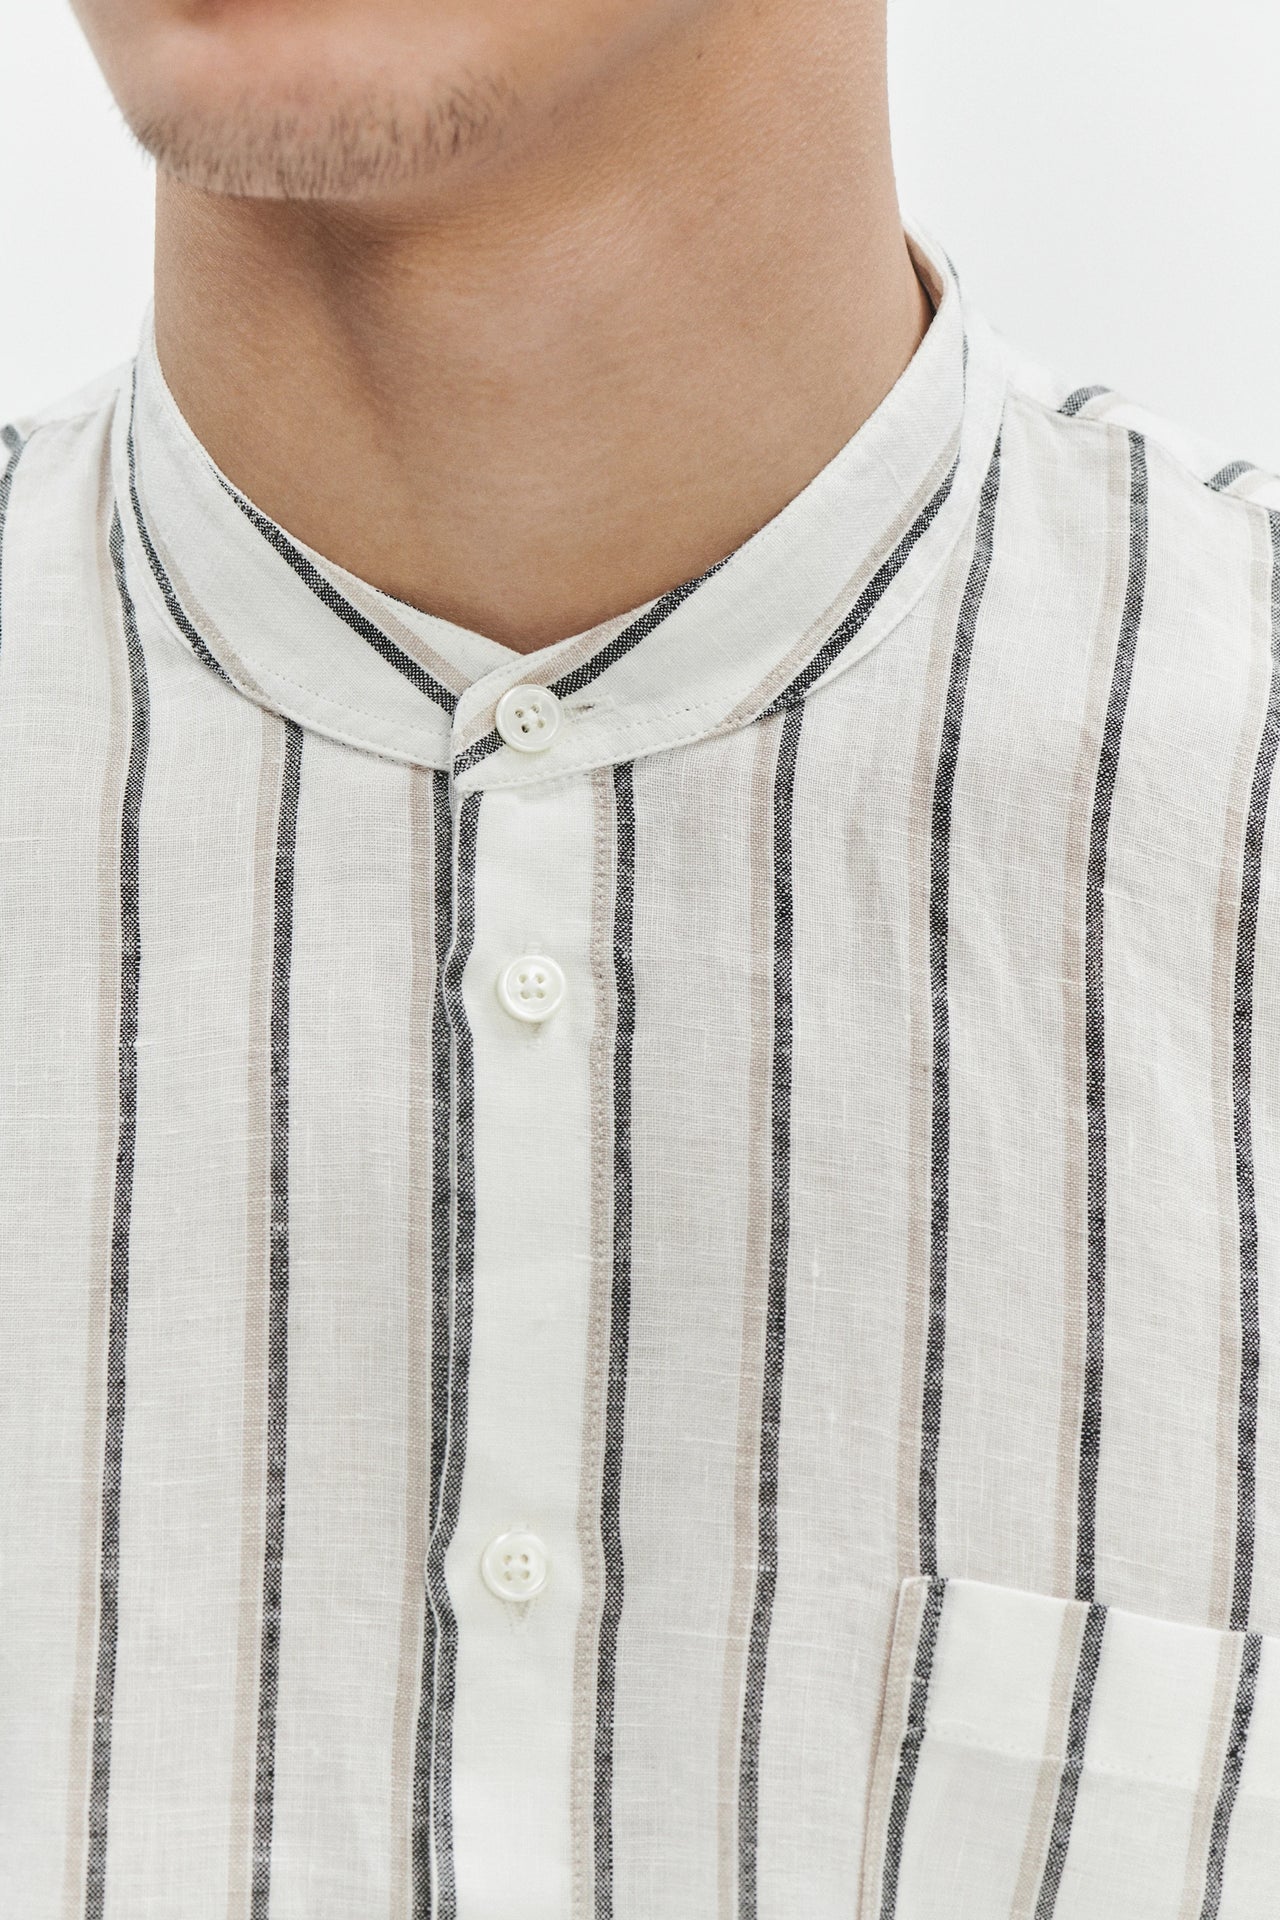 Zen Shirt in a Fine White Black and Beige Double Striped Bohemian LInen